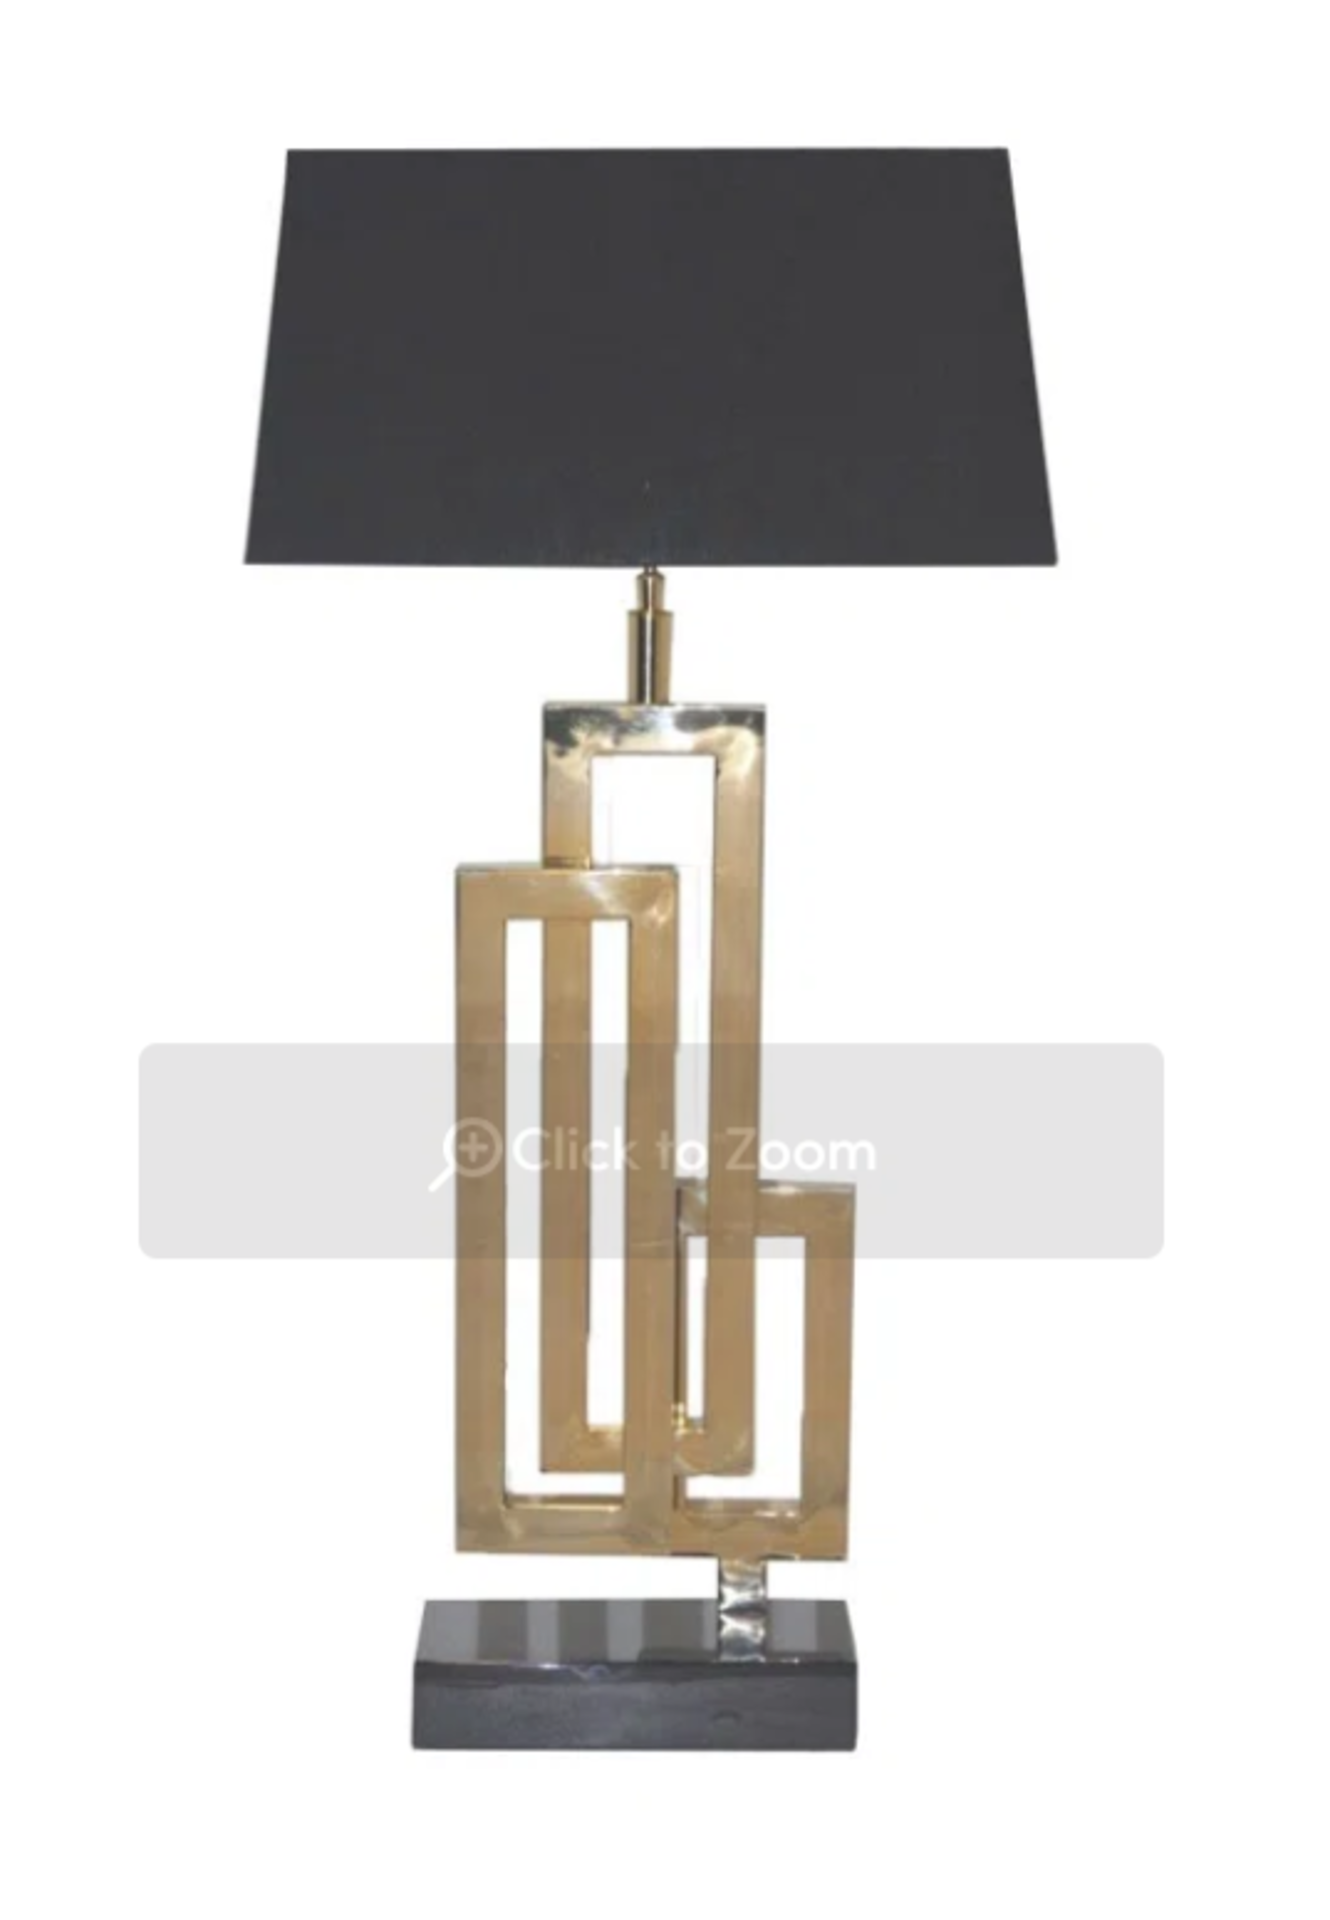 Lighting Table Lamp - Black Shade. RRP £259.99. - U2